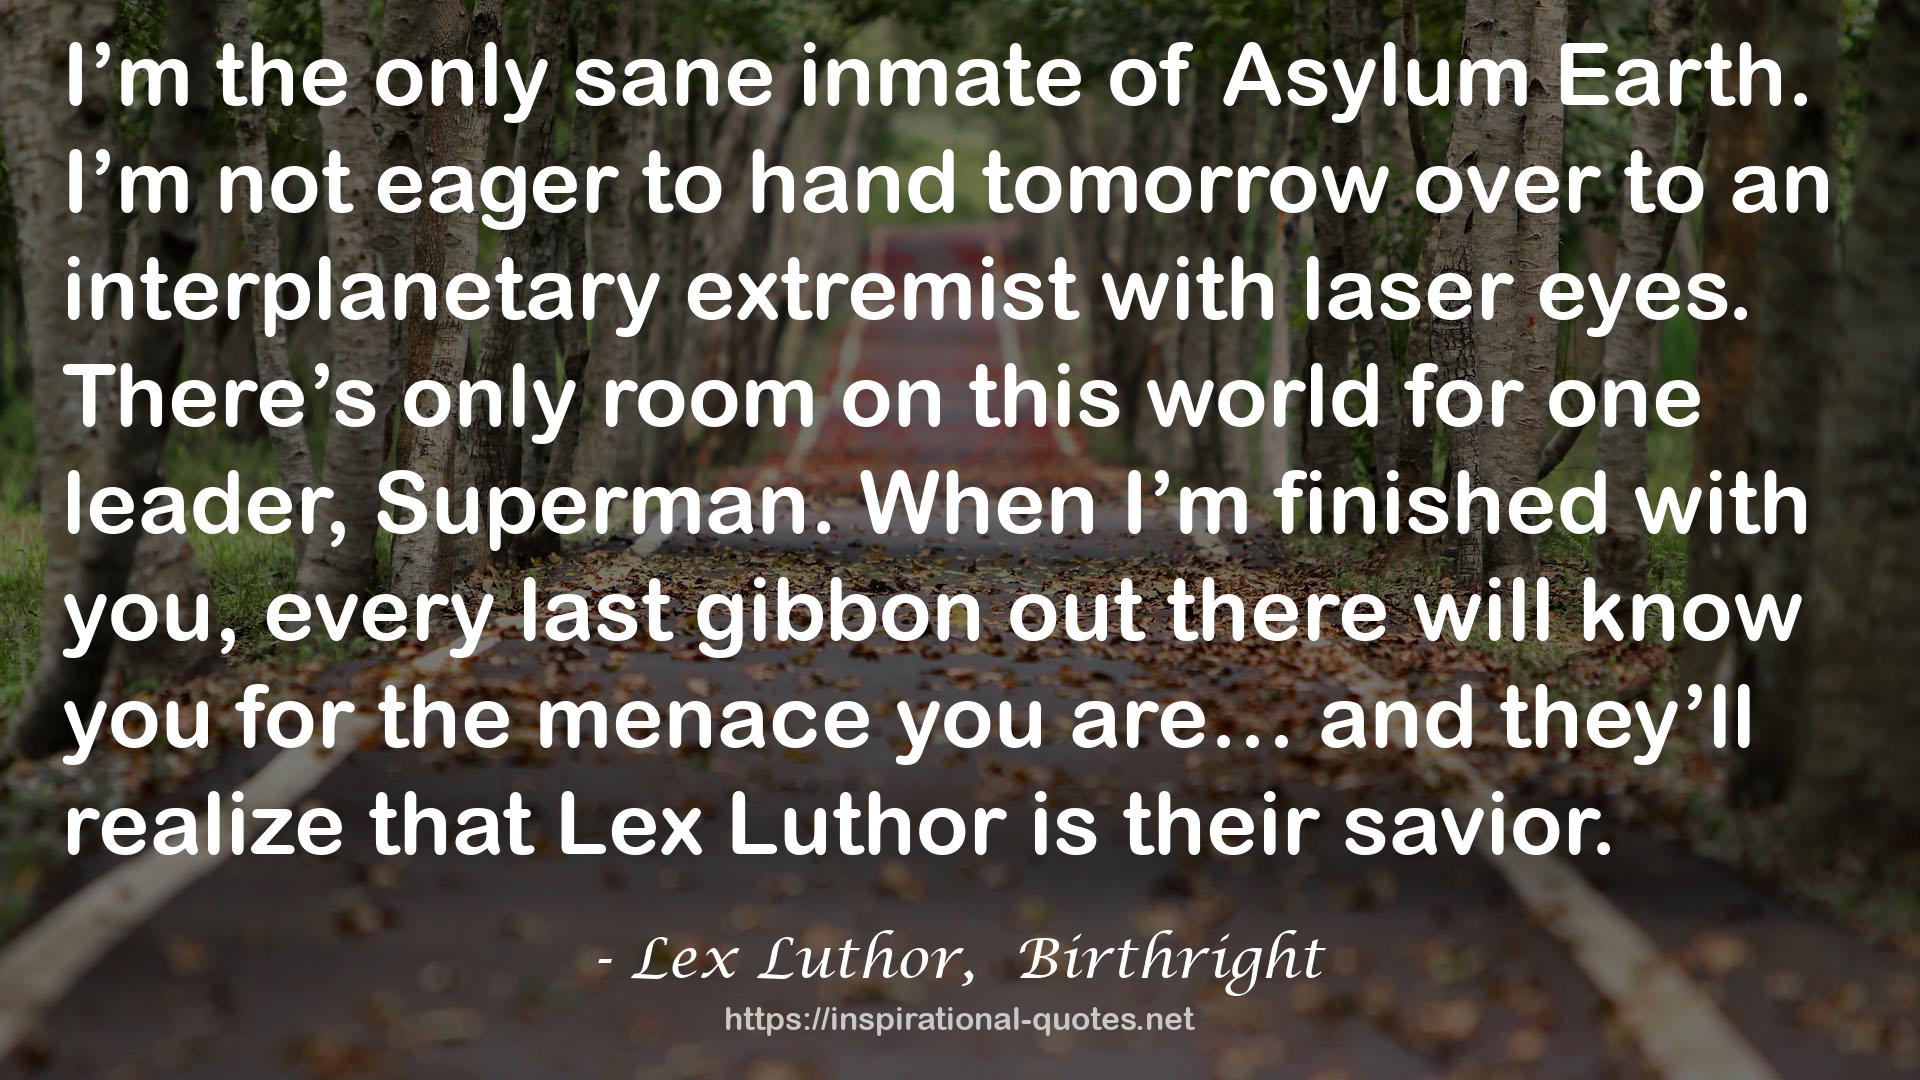 Lex Luthor,  Birthright QUOTES